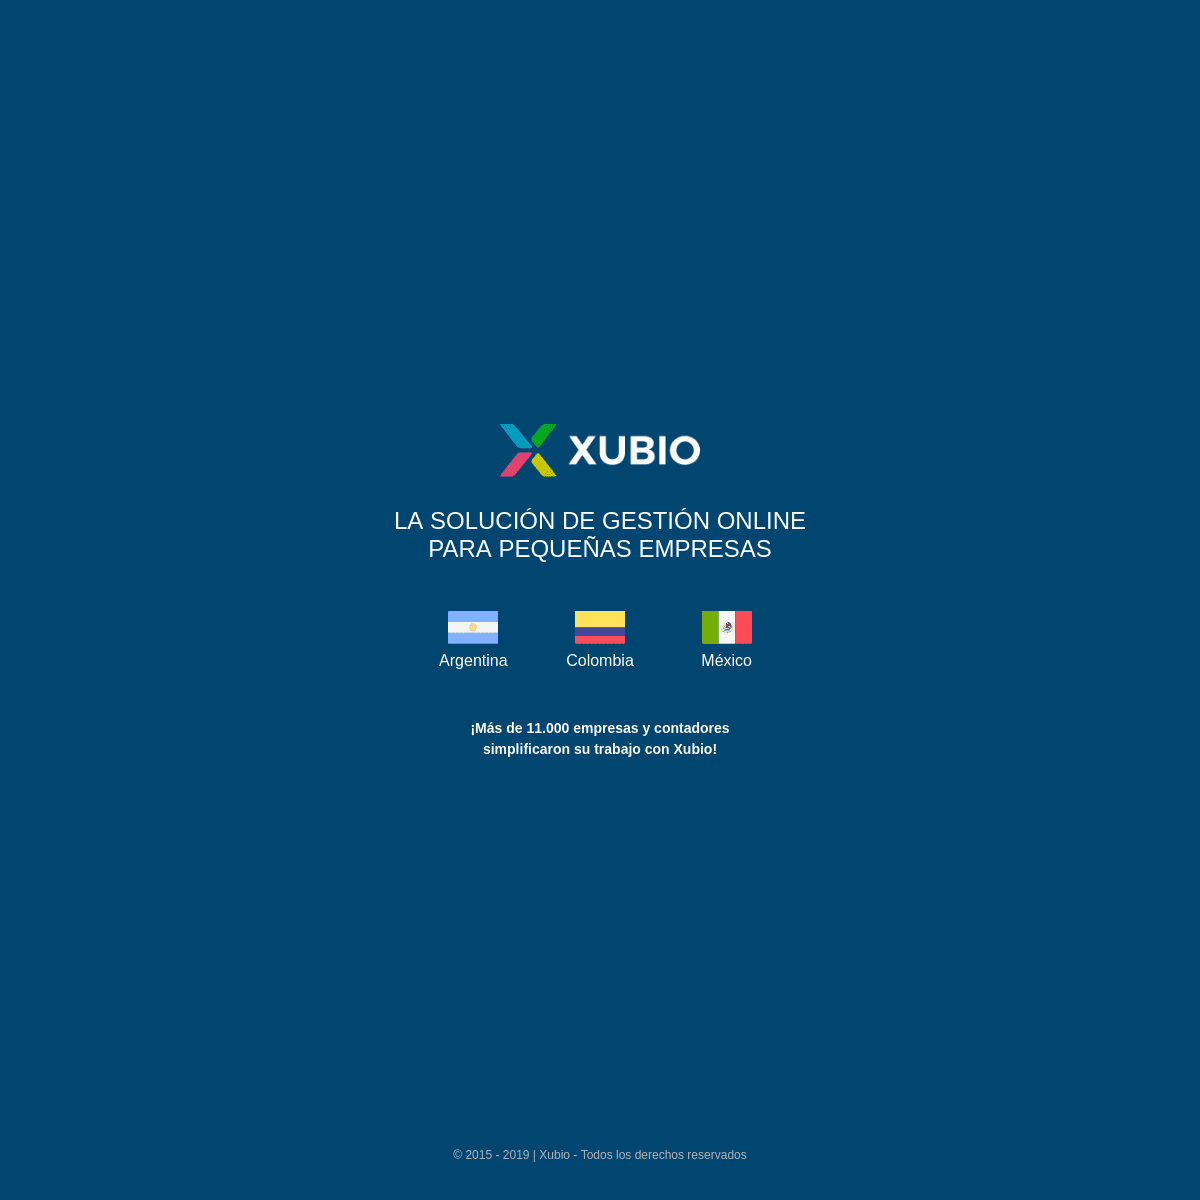 A complete backup of xubio.com